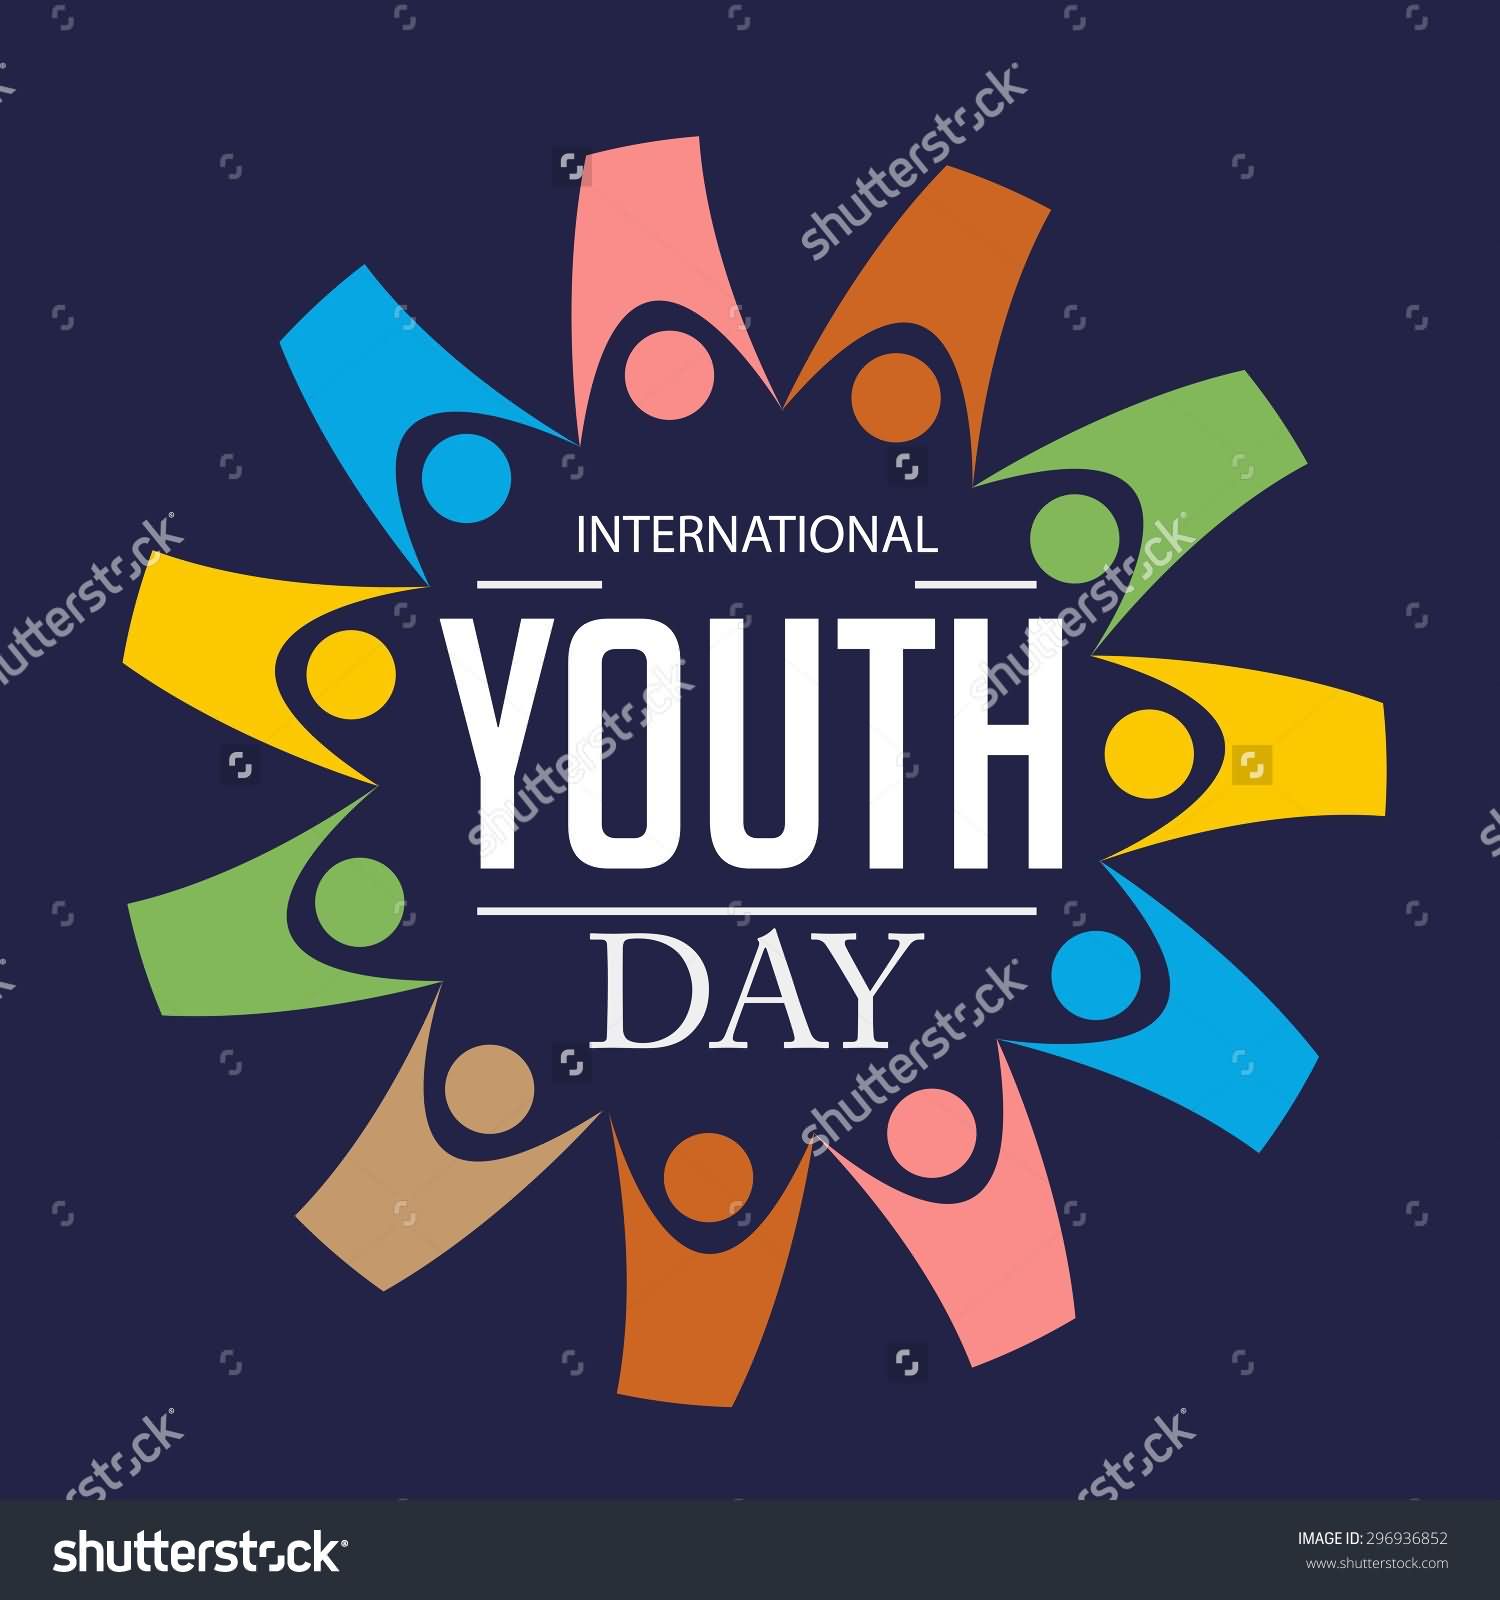 International Youth Day Illustration